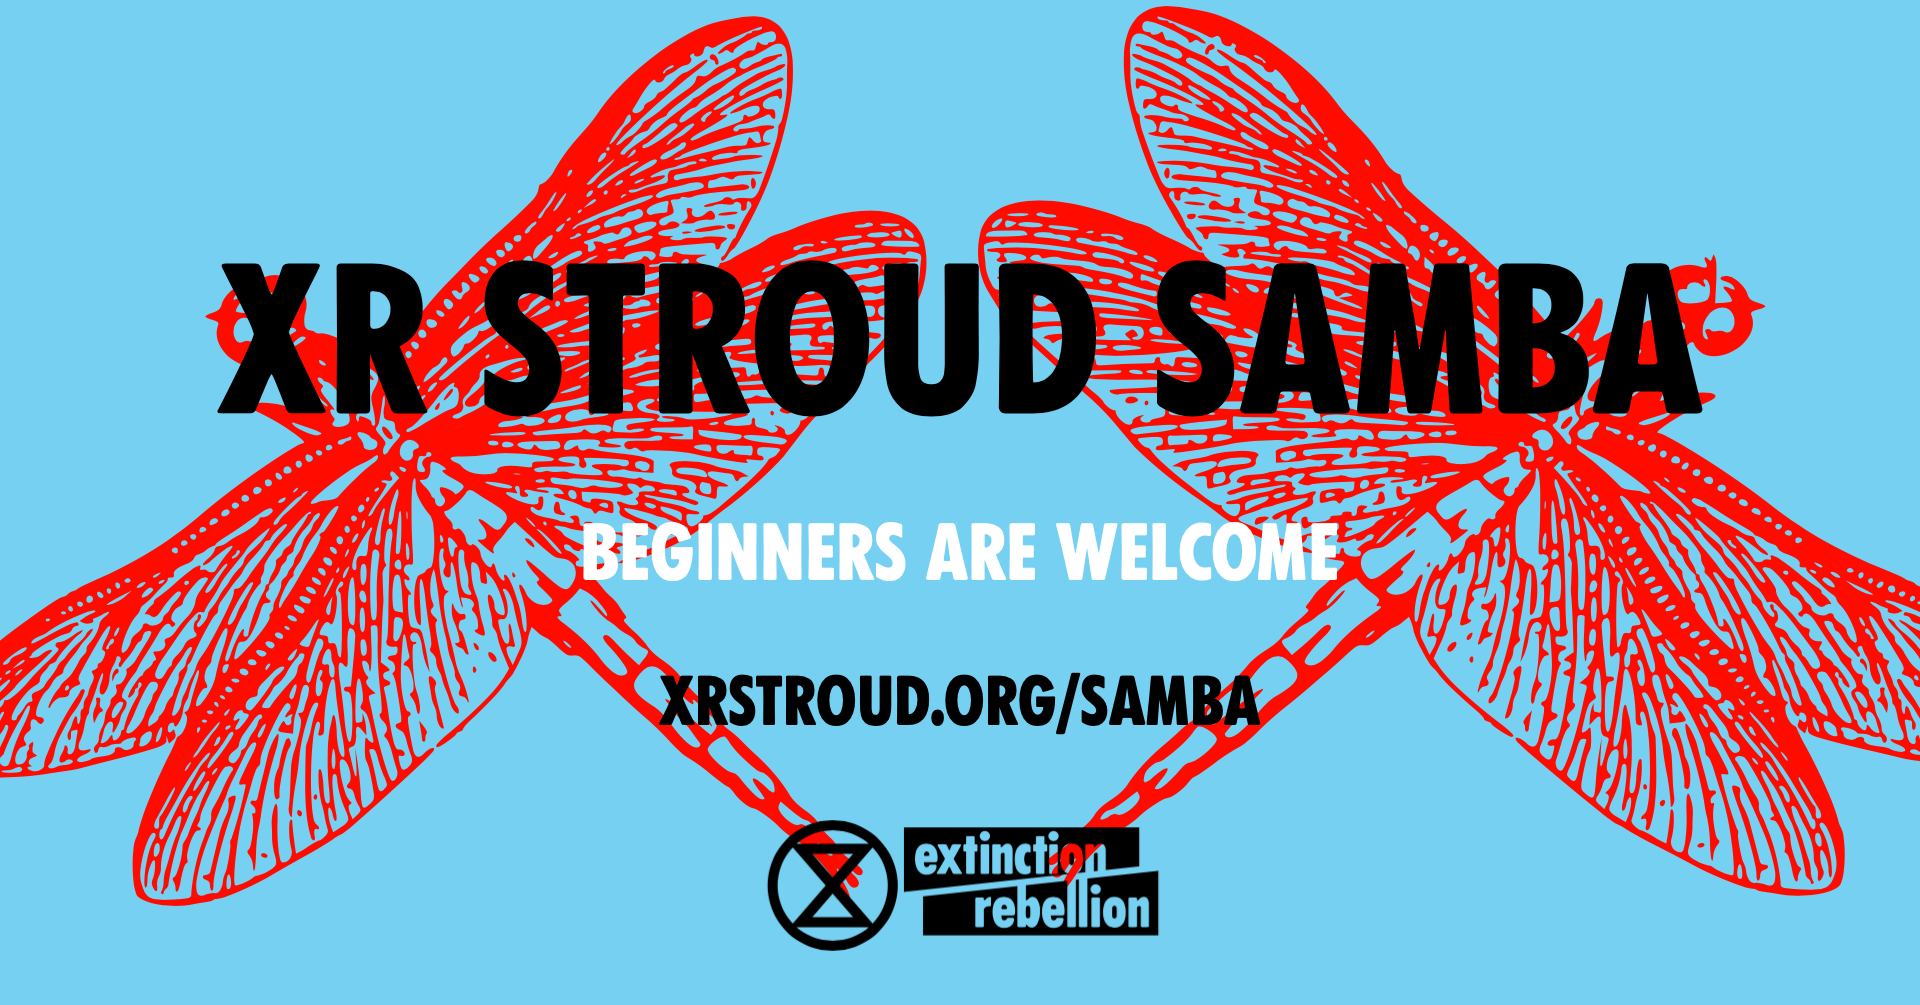 XR Stroud Samba beginners are welcome - xrstroud.org/samba